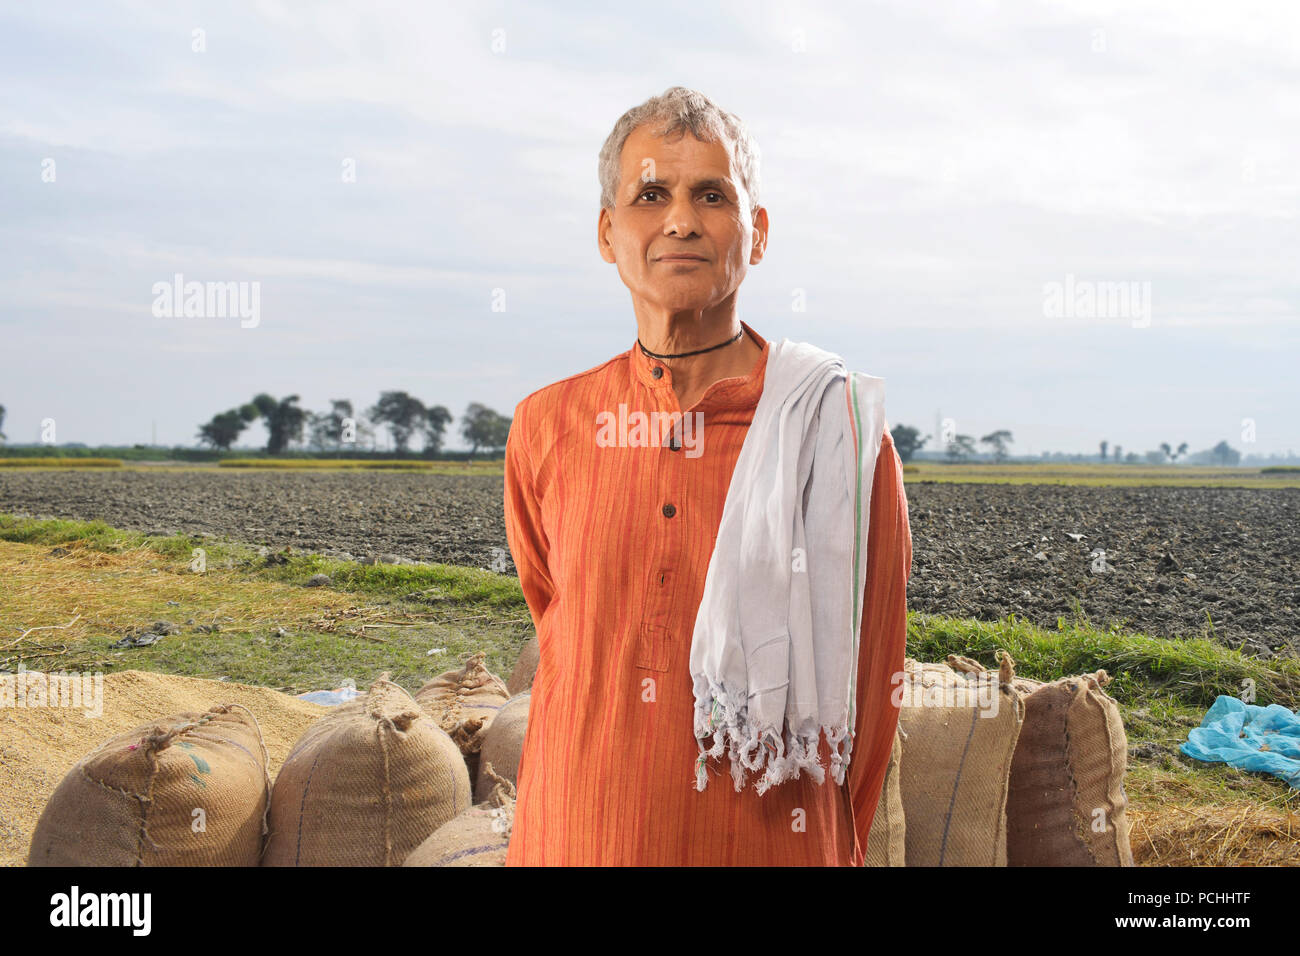 Portrait of farmer standing in paddy field Stock Photo